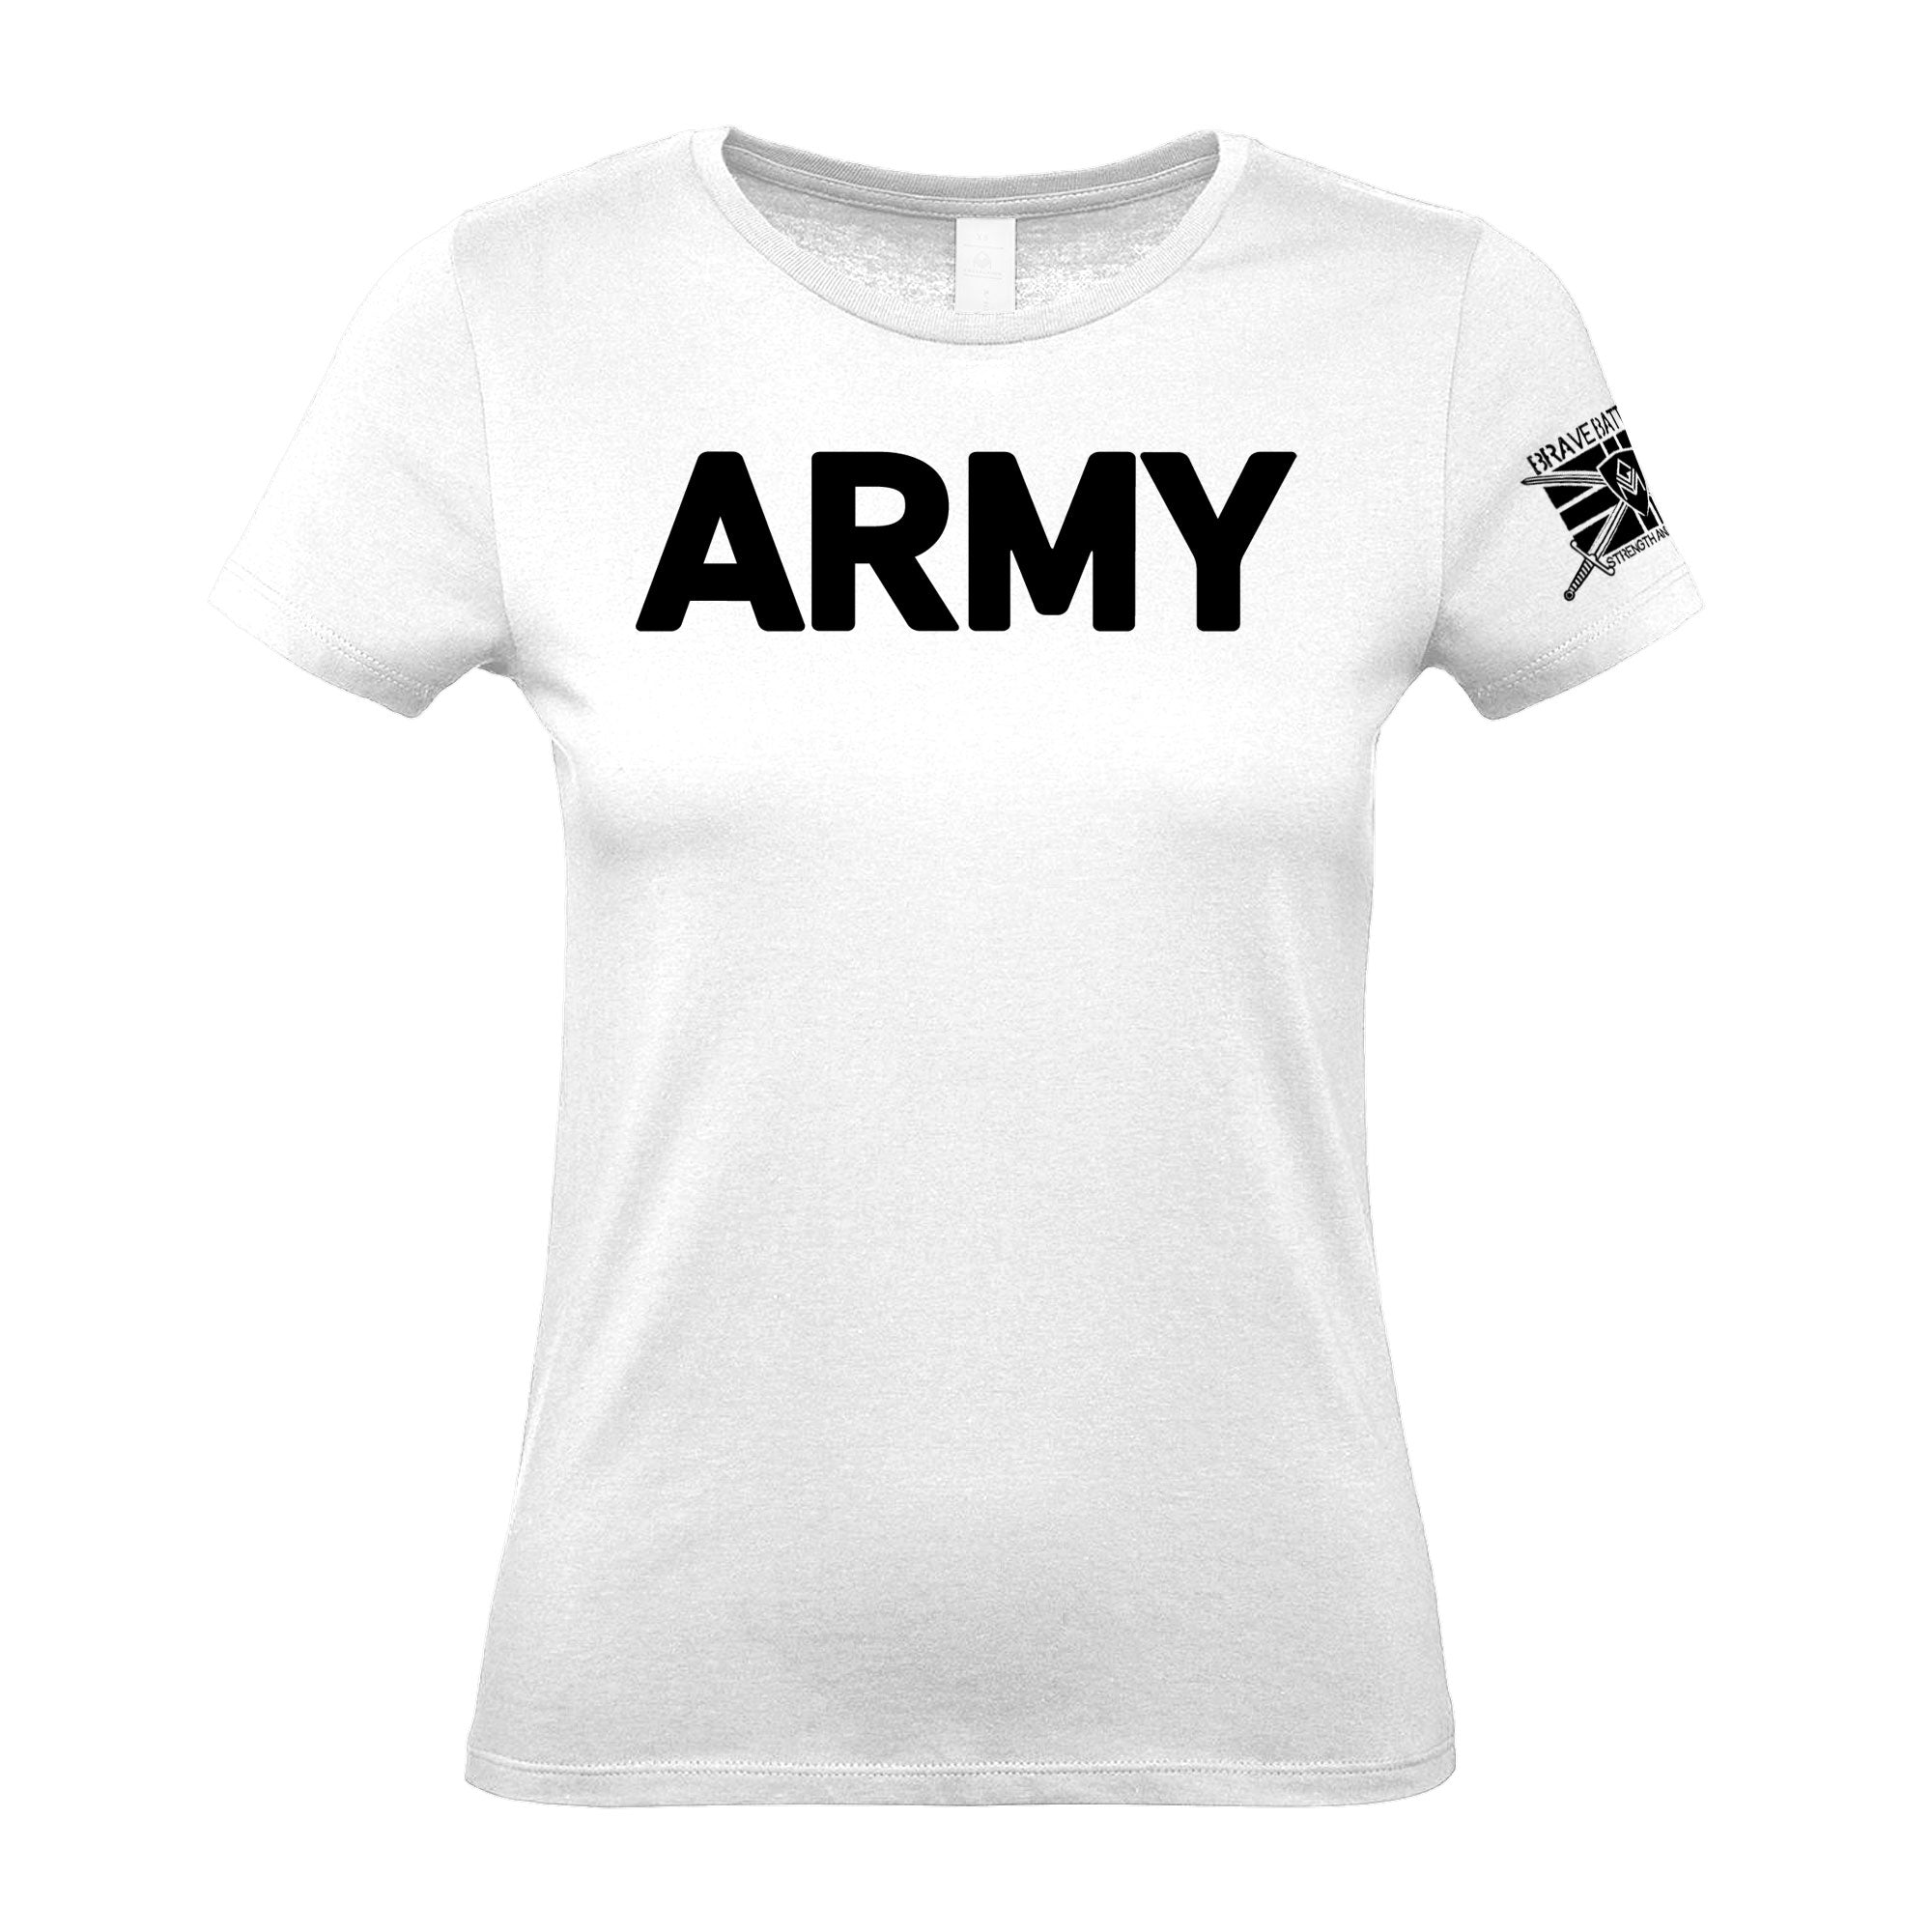 Army - Women's Gym T-Shirt